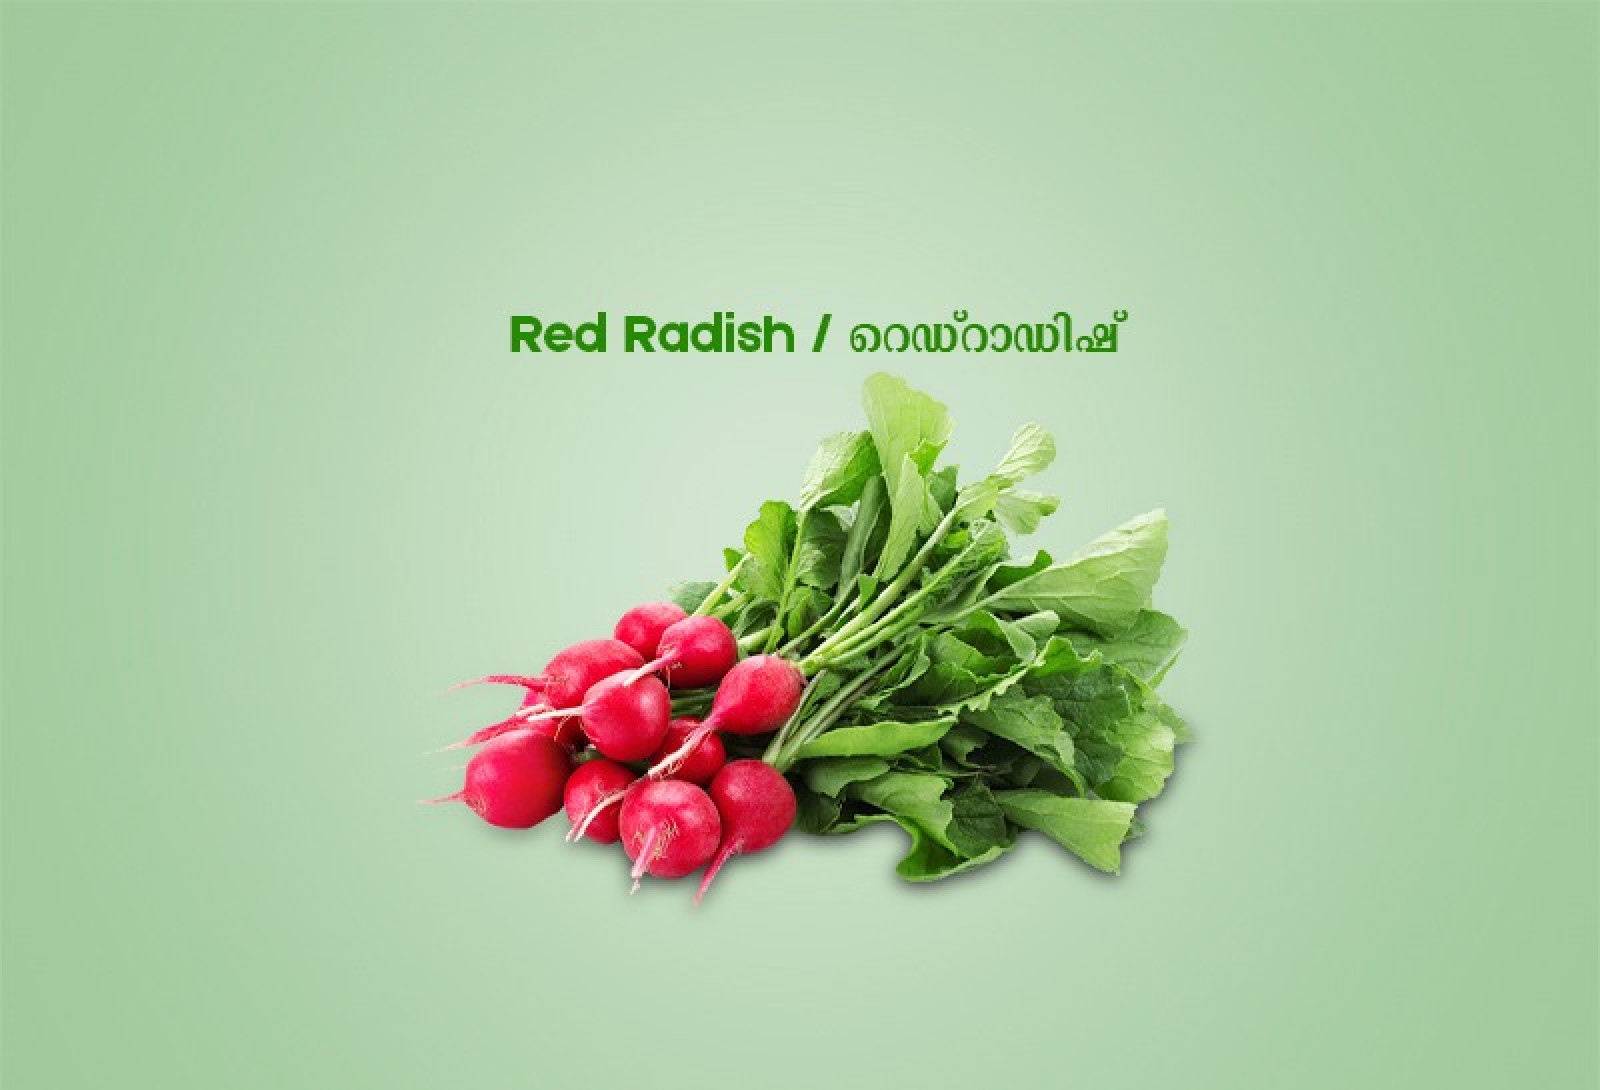 Red Radish / റെഡ്റാഡിഷ് - 250.00 gm Pack ( Ozone Washed)